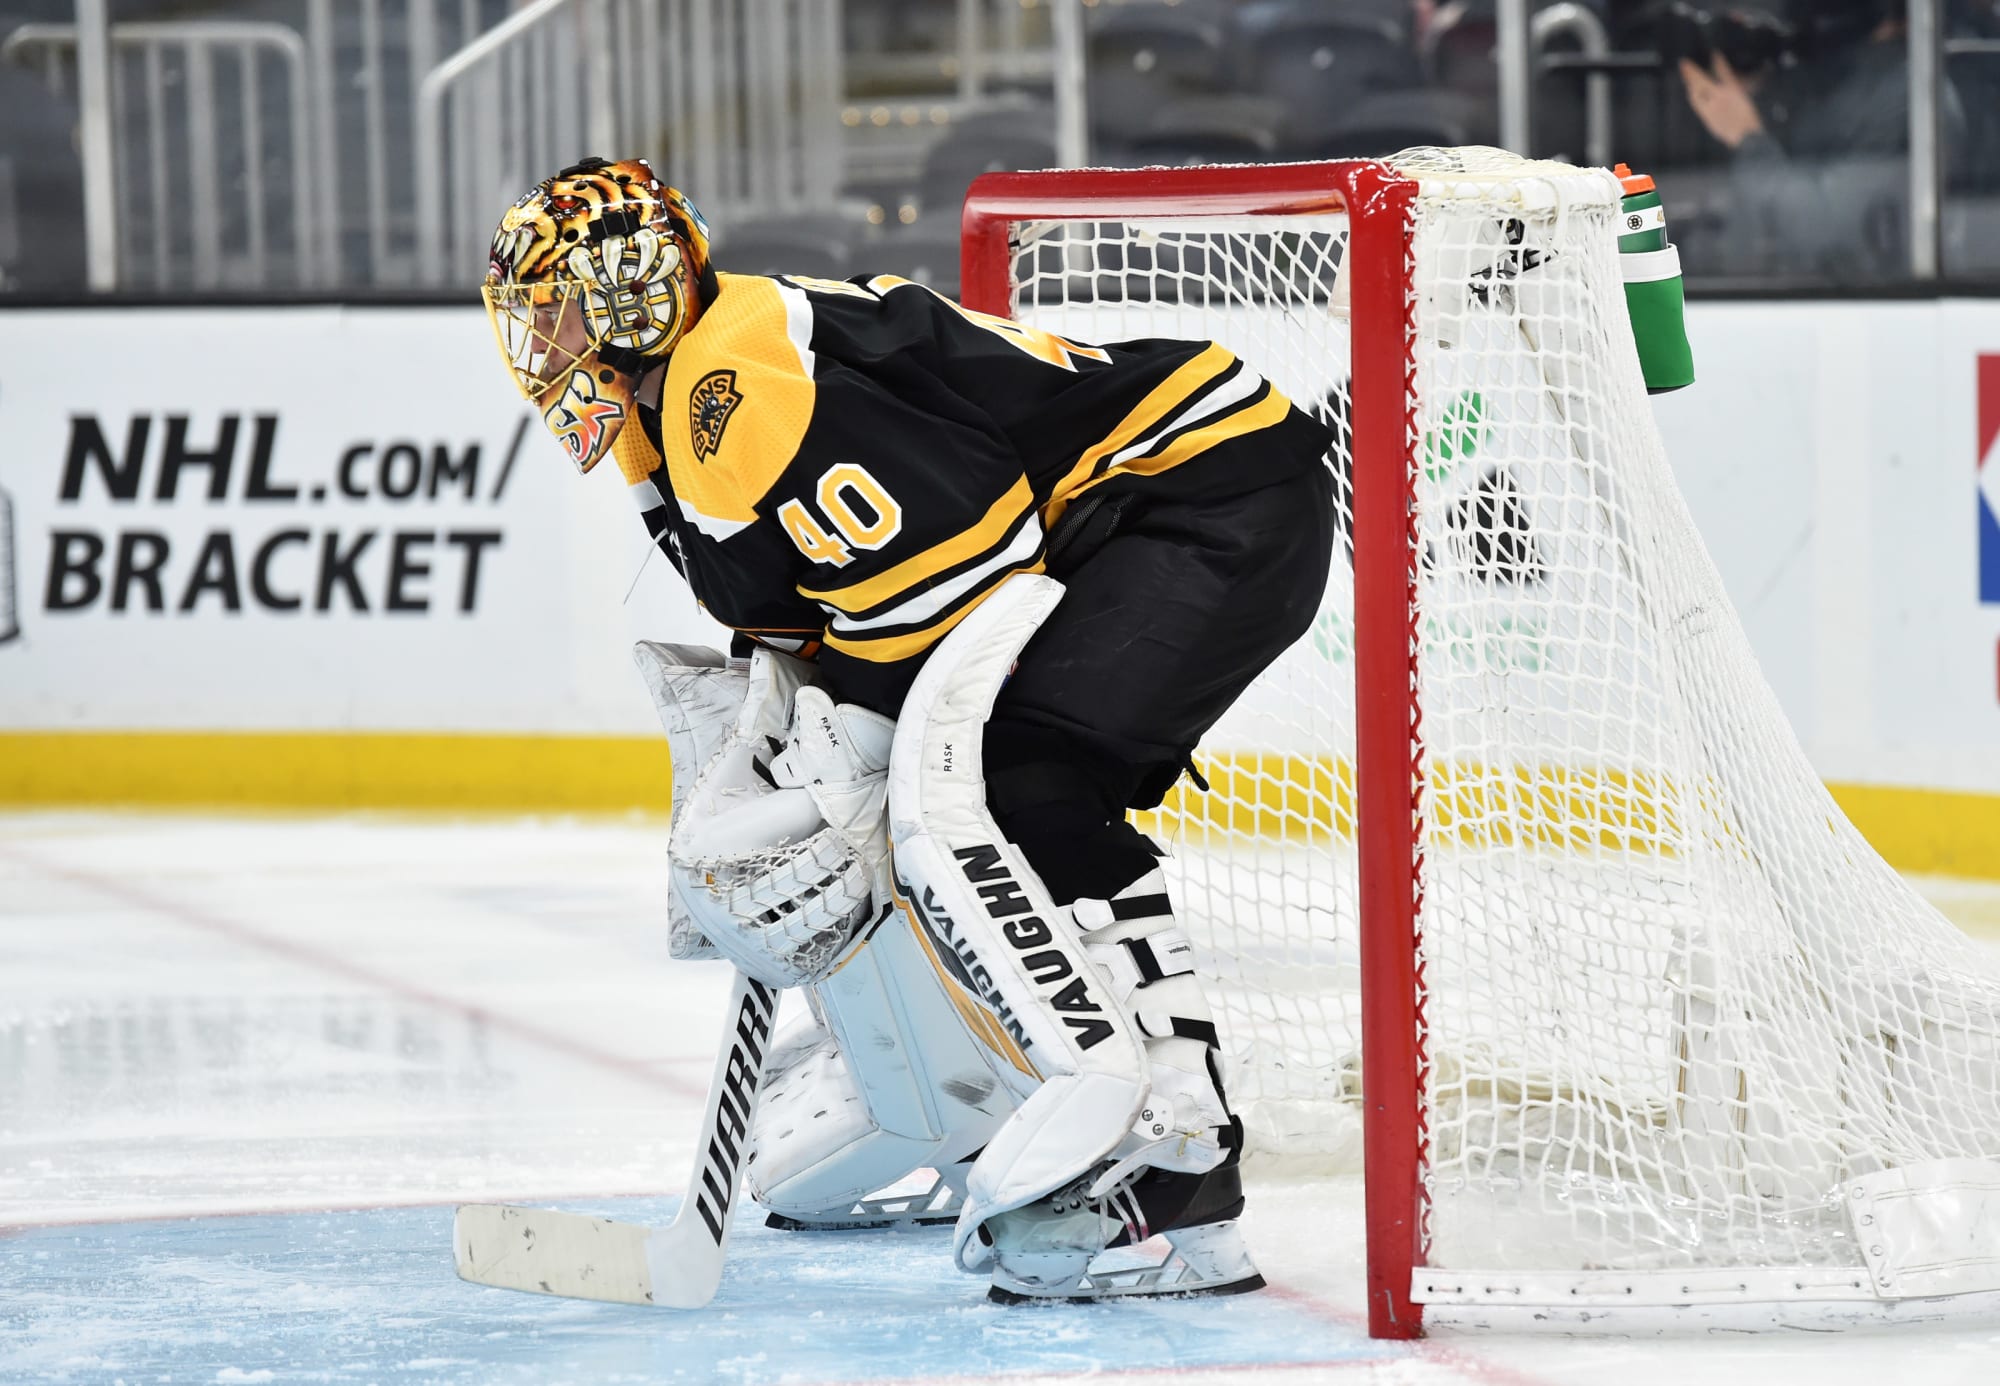 There's no more denying it: Boston Bruins goalie Tuukka Rask is